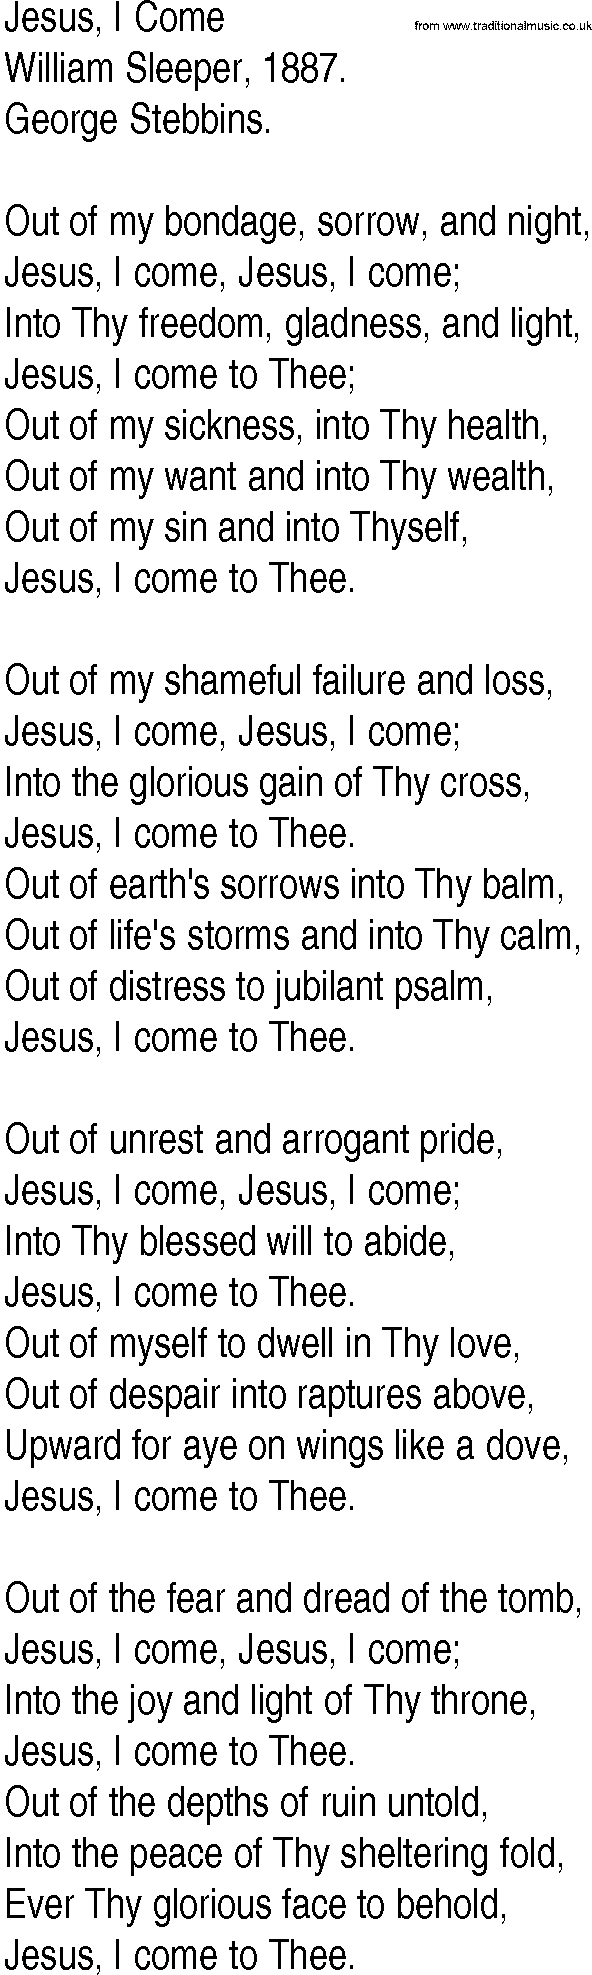 Hymn and Gospel Song: Jesus, I Come by William Sleeper lyrics